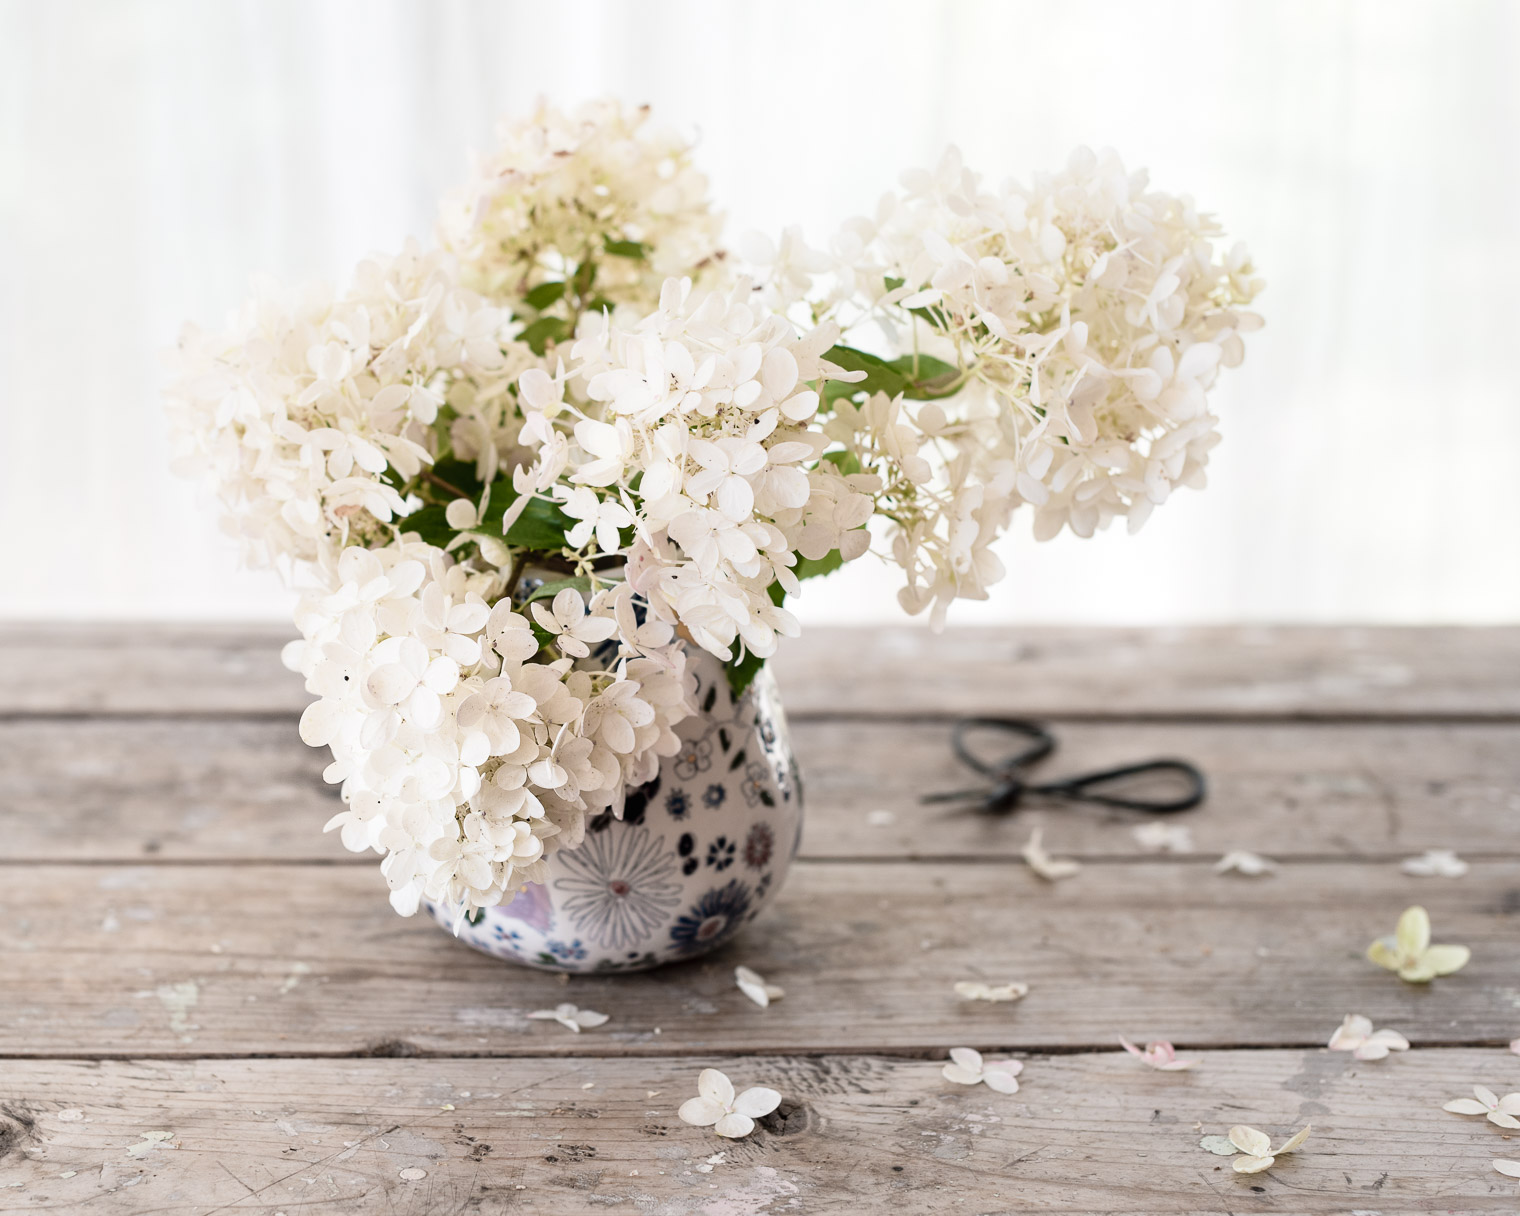 Hydrangea Bouquet, Late Summer Arrangements Idea #3, Hydrangea Heaven, Keeping With the Times